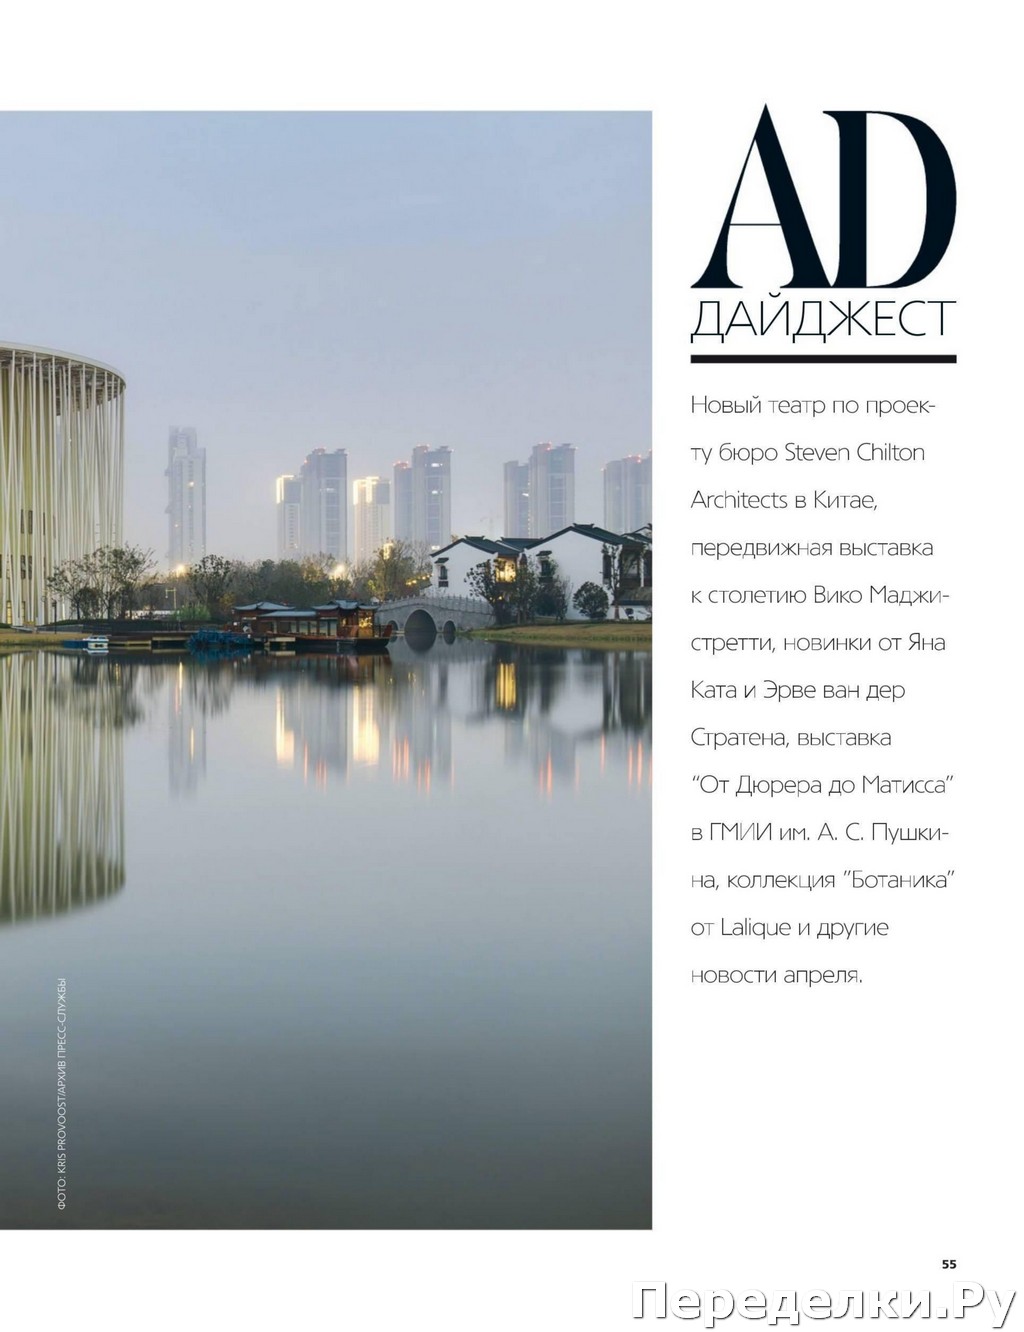 AD Architectural Digest 4 aprel 2020 52